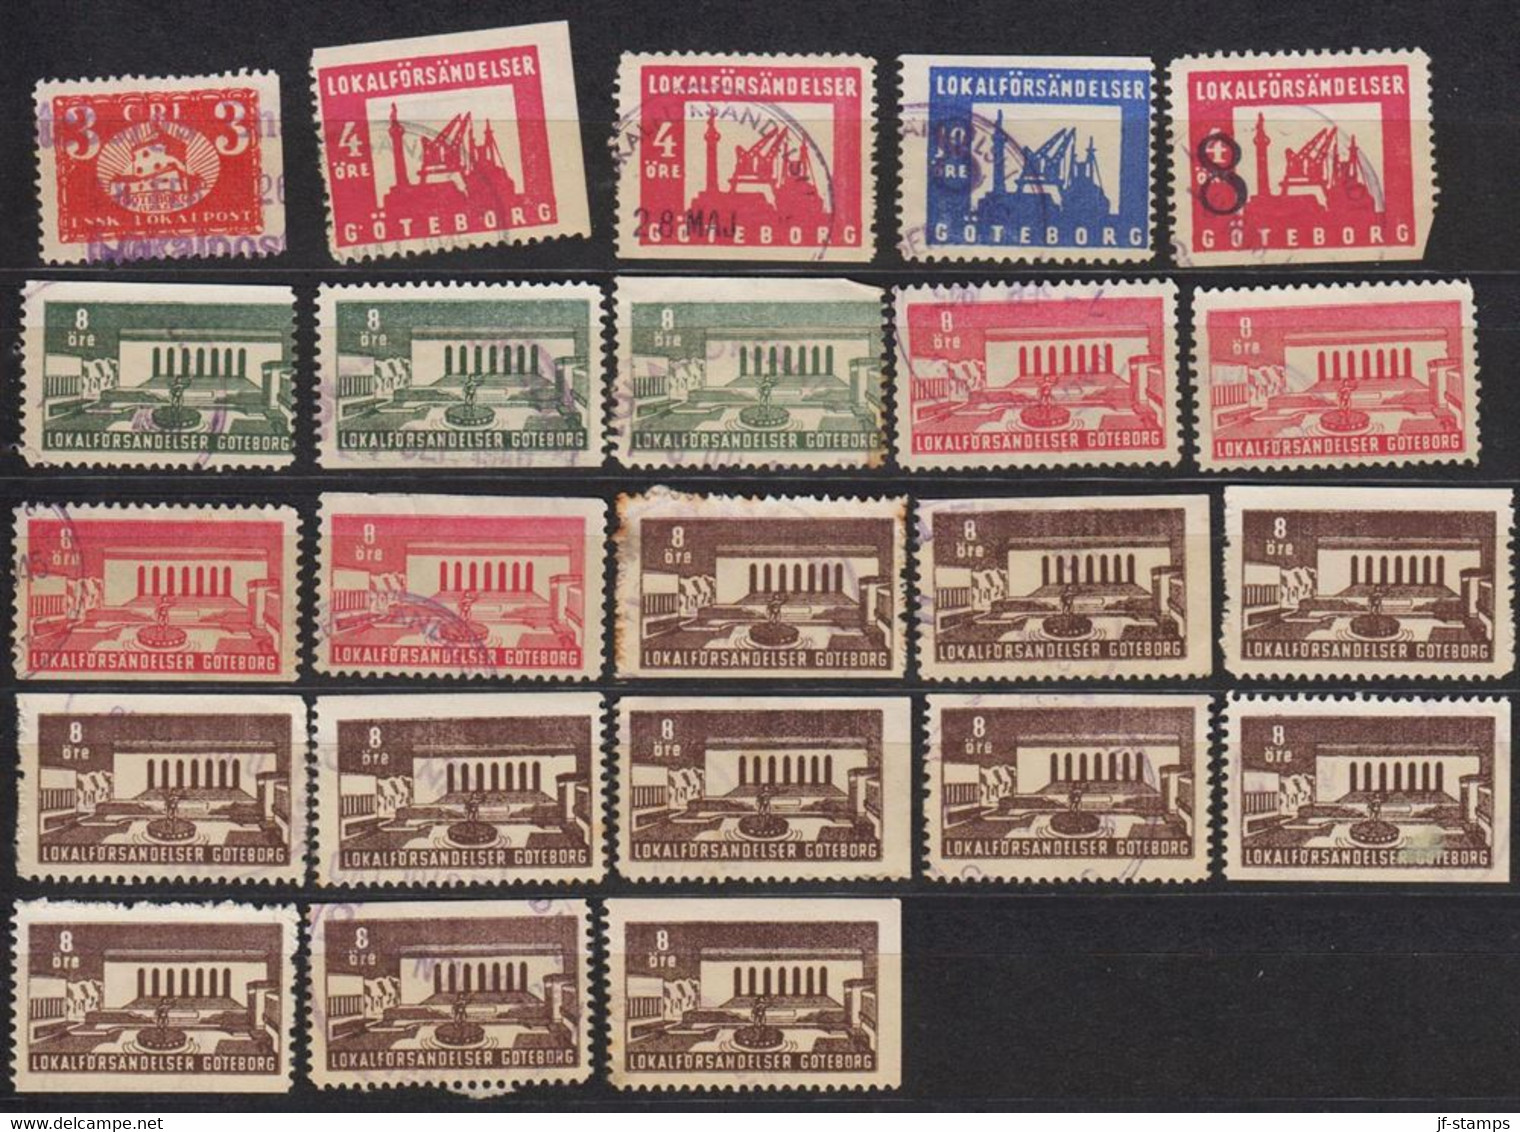 1926-1945. SVERIGE. LOKALFÖRSÄNDELSER GÖTEBORG. 23 Stamps All Cancelled. Few With Thin Spot.  - JF520115 - Ortsausgaben